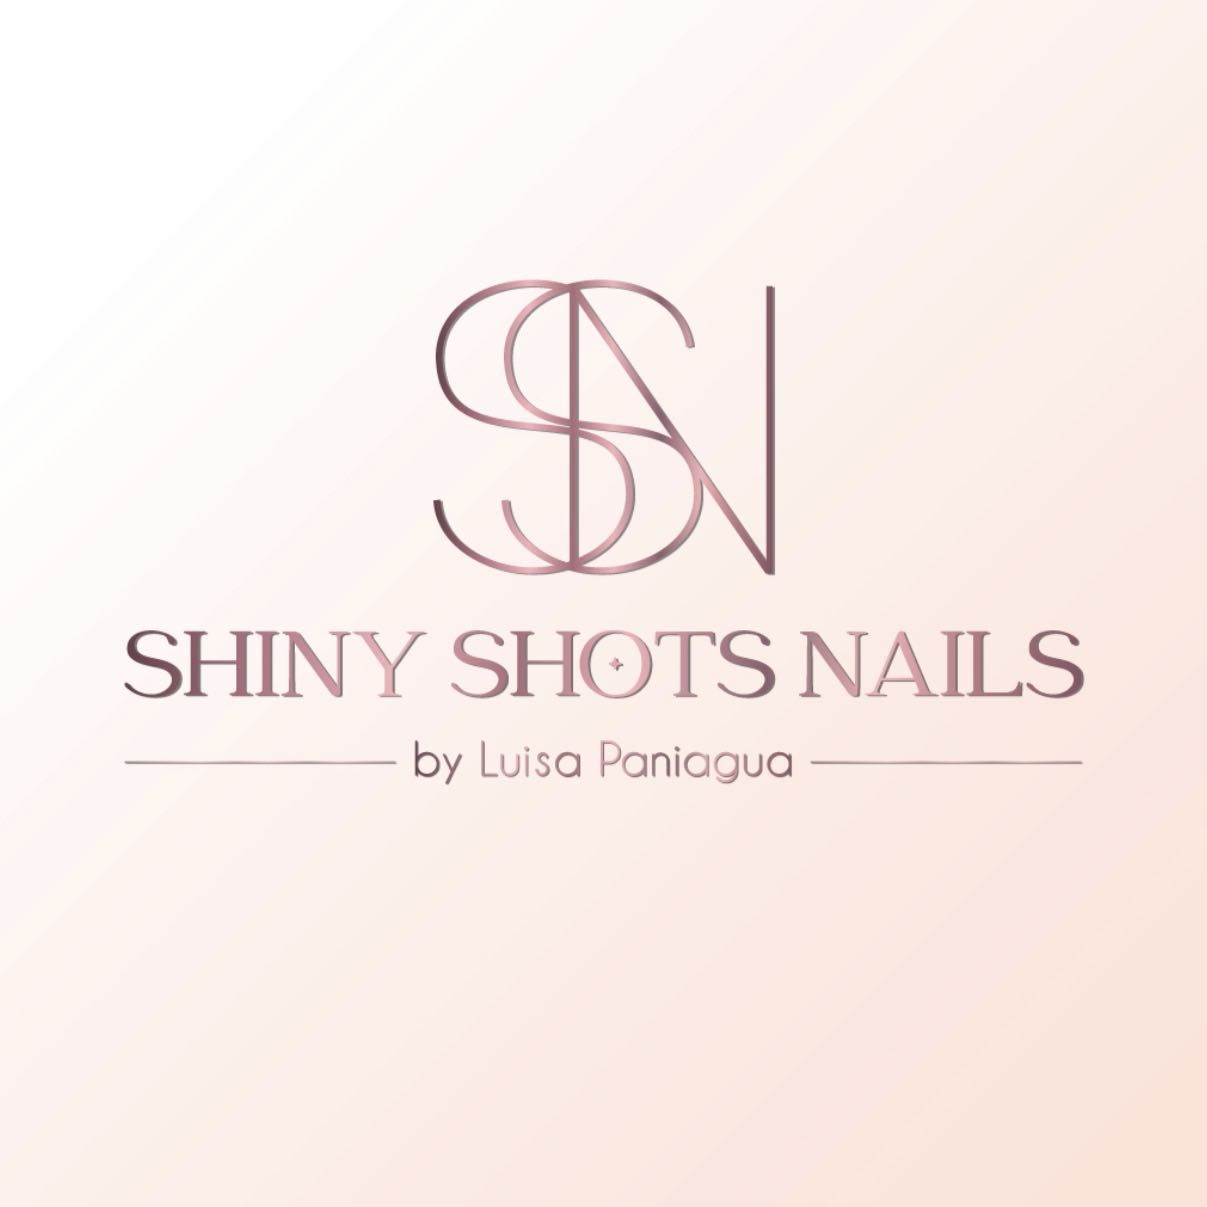 Shiny Shots Nails, 10350 pines blvd, D106A, 109, Pembroke Pines, 33025